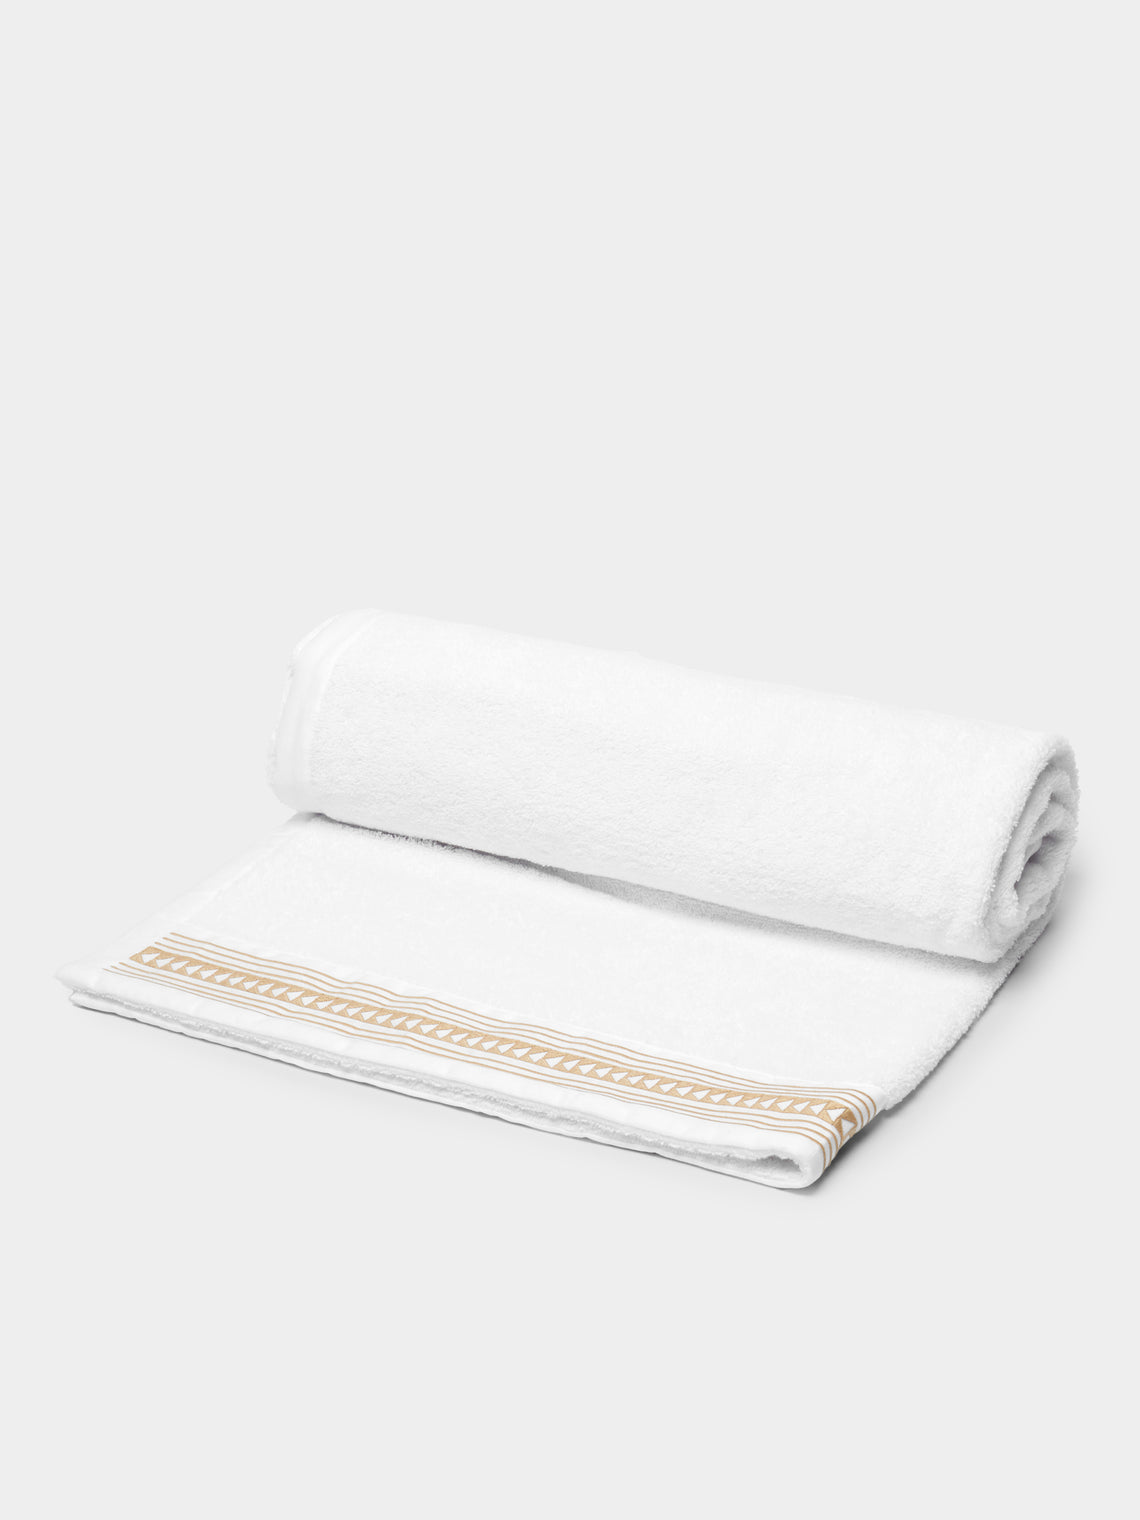 Loretta Caponi - Arrows Hand-Embroidered Cotton Bath Towel -  - ABASK